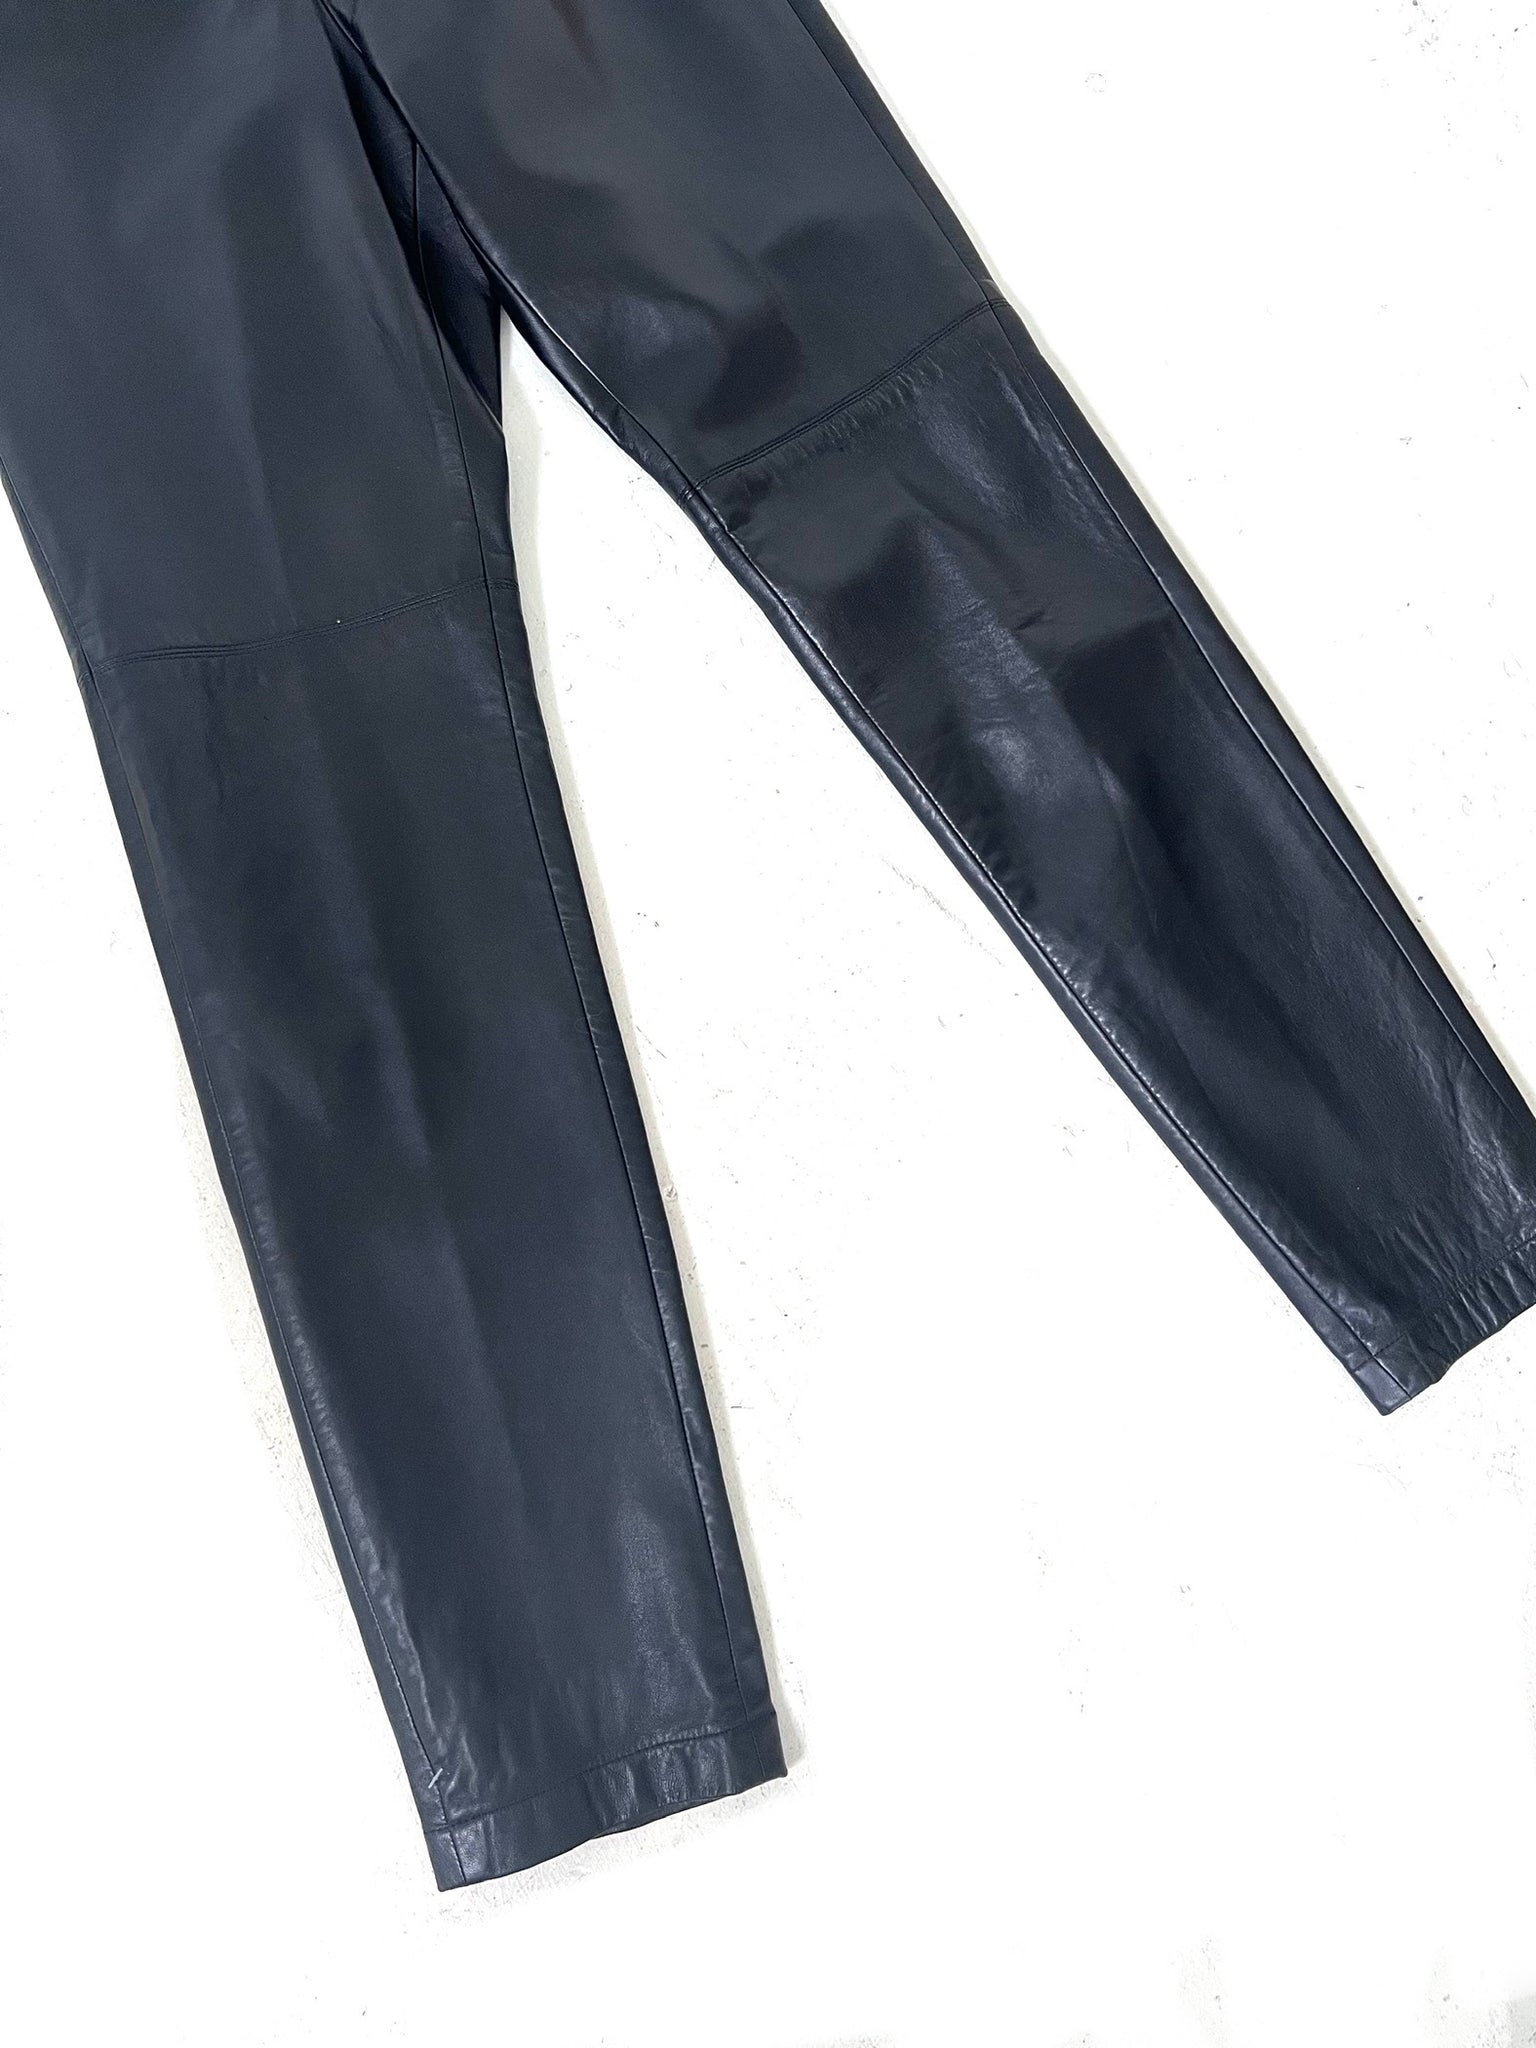 Black Leather 5 Pocket Pant by Calvin Klein